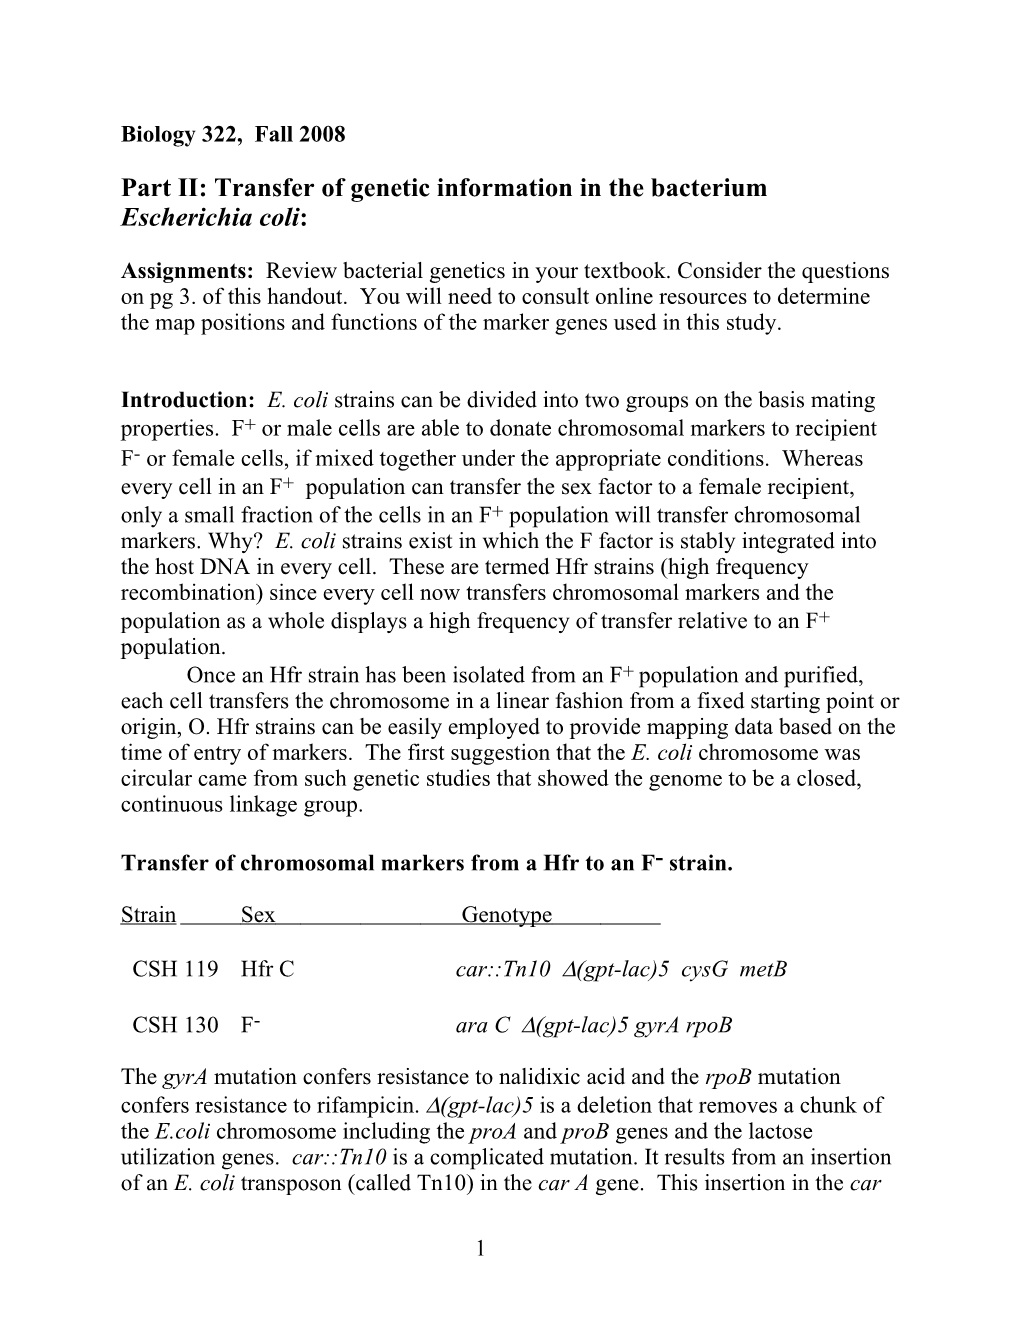 Part II: Transfer of Genetic Information in the Bacterium Escherichia Coli